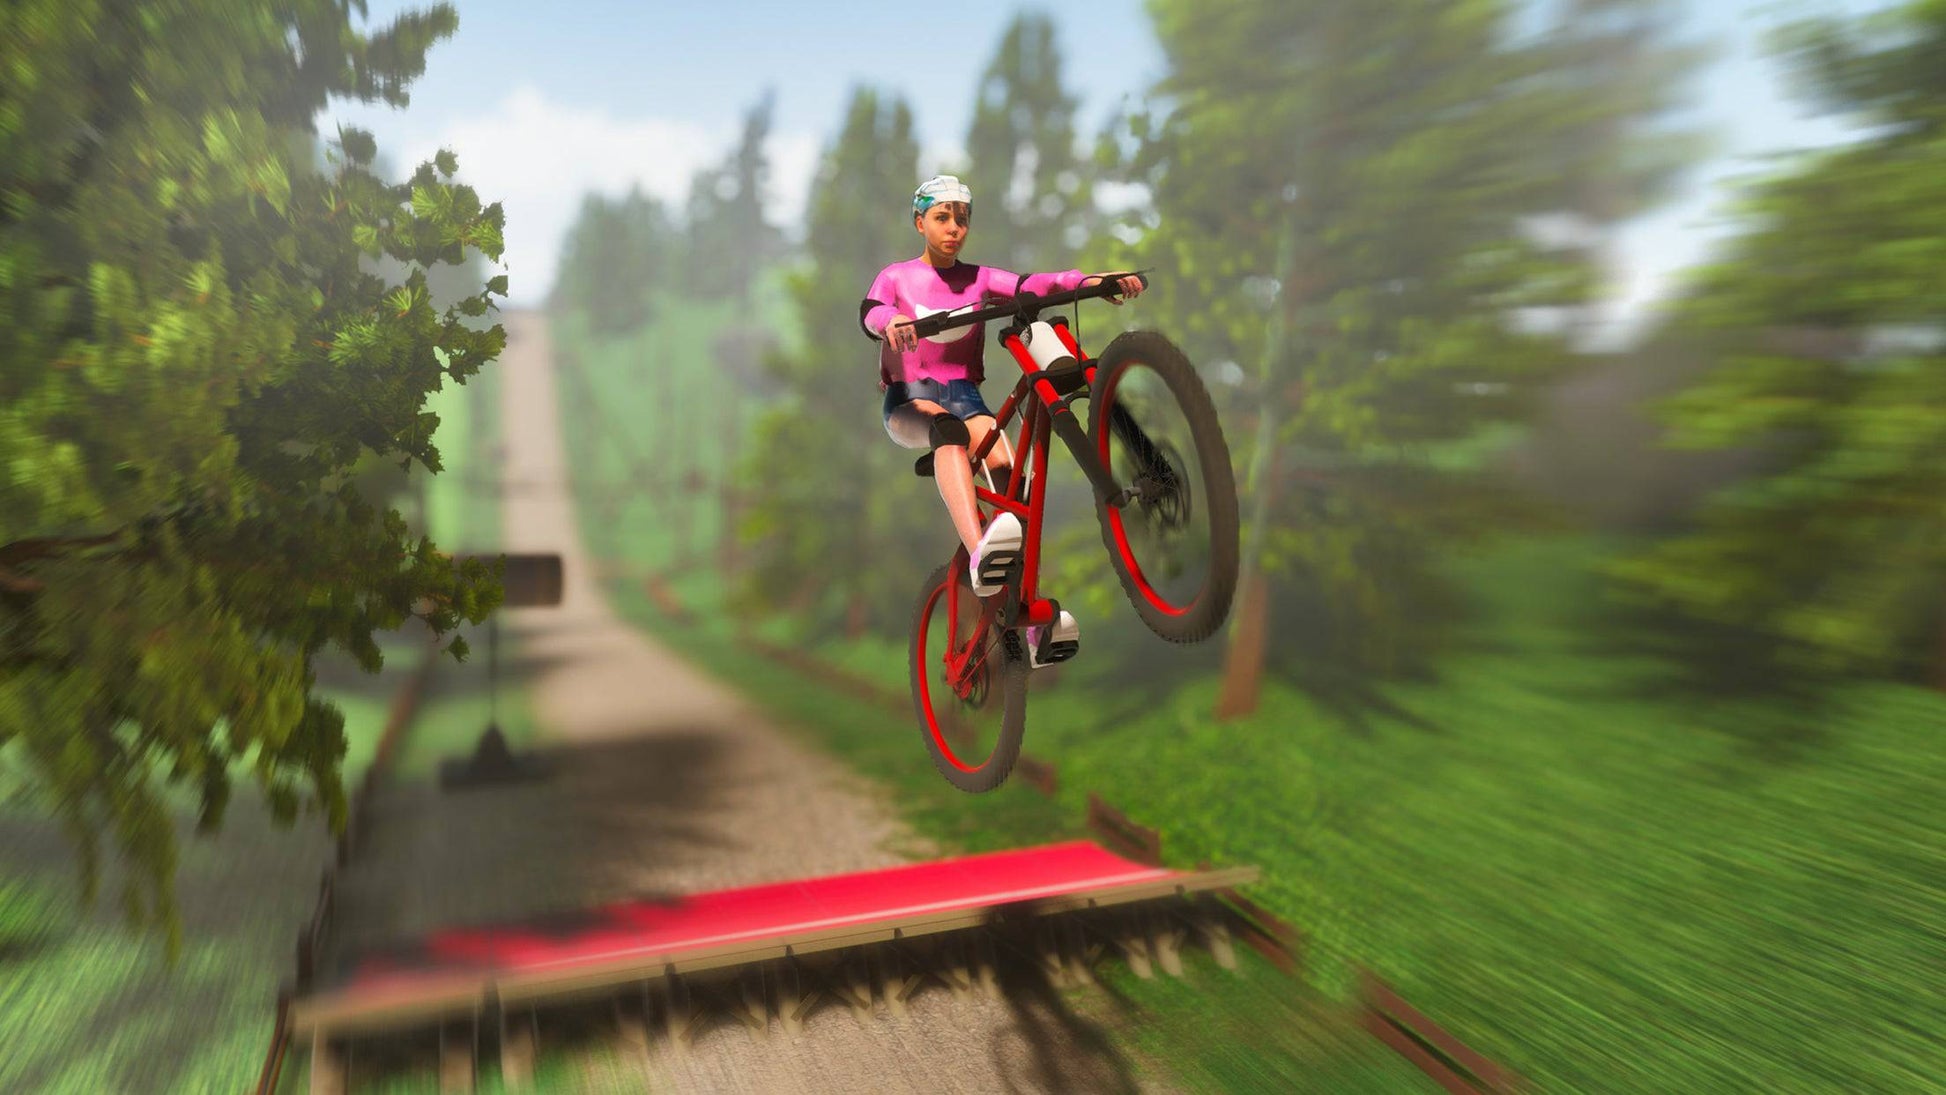 Bicycle Stunts: BMX Bike Games - Sell My Game